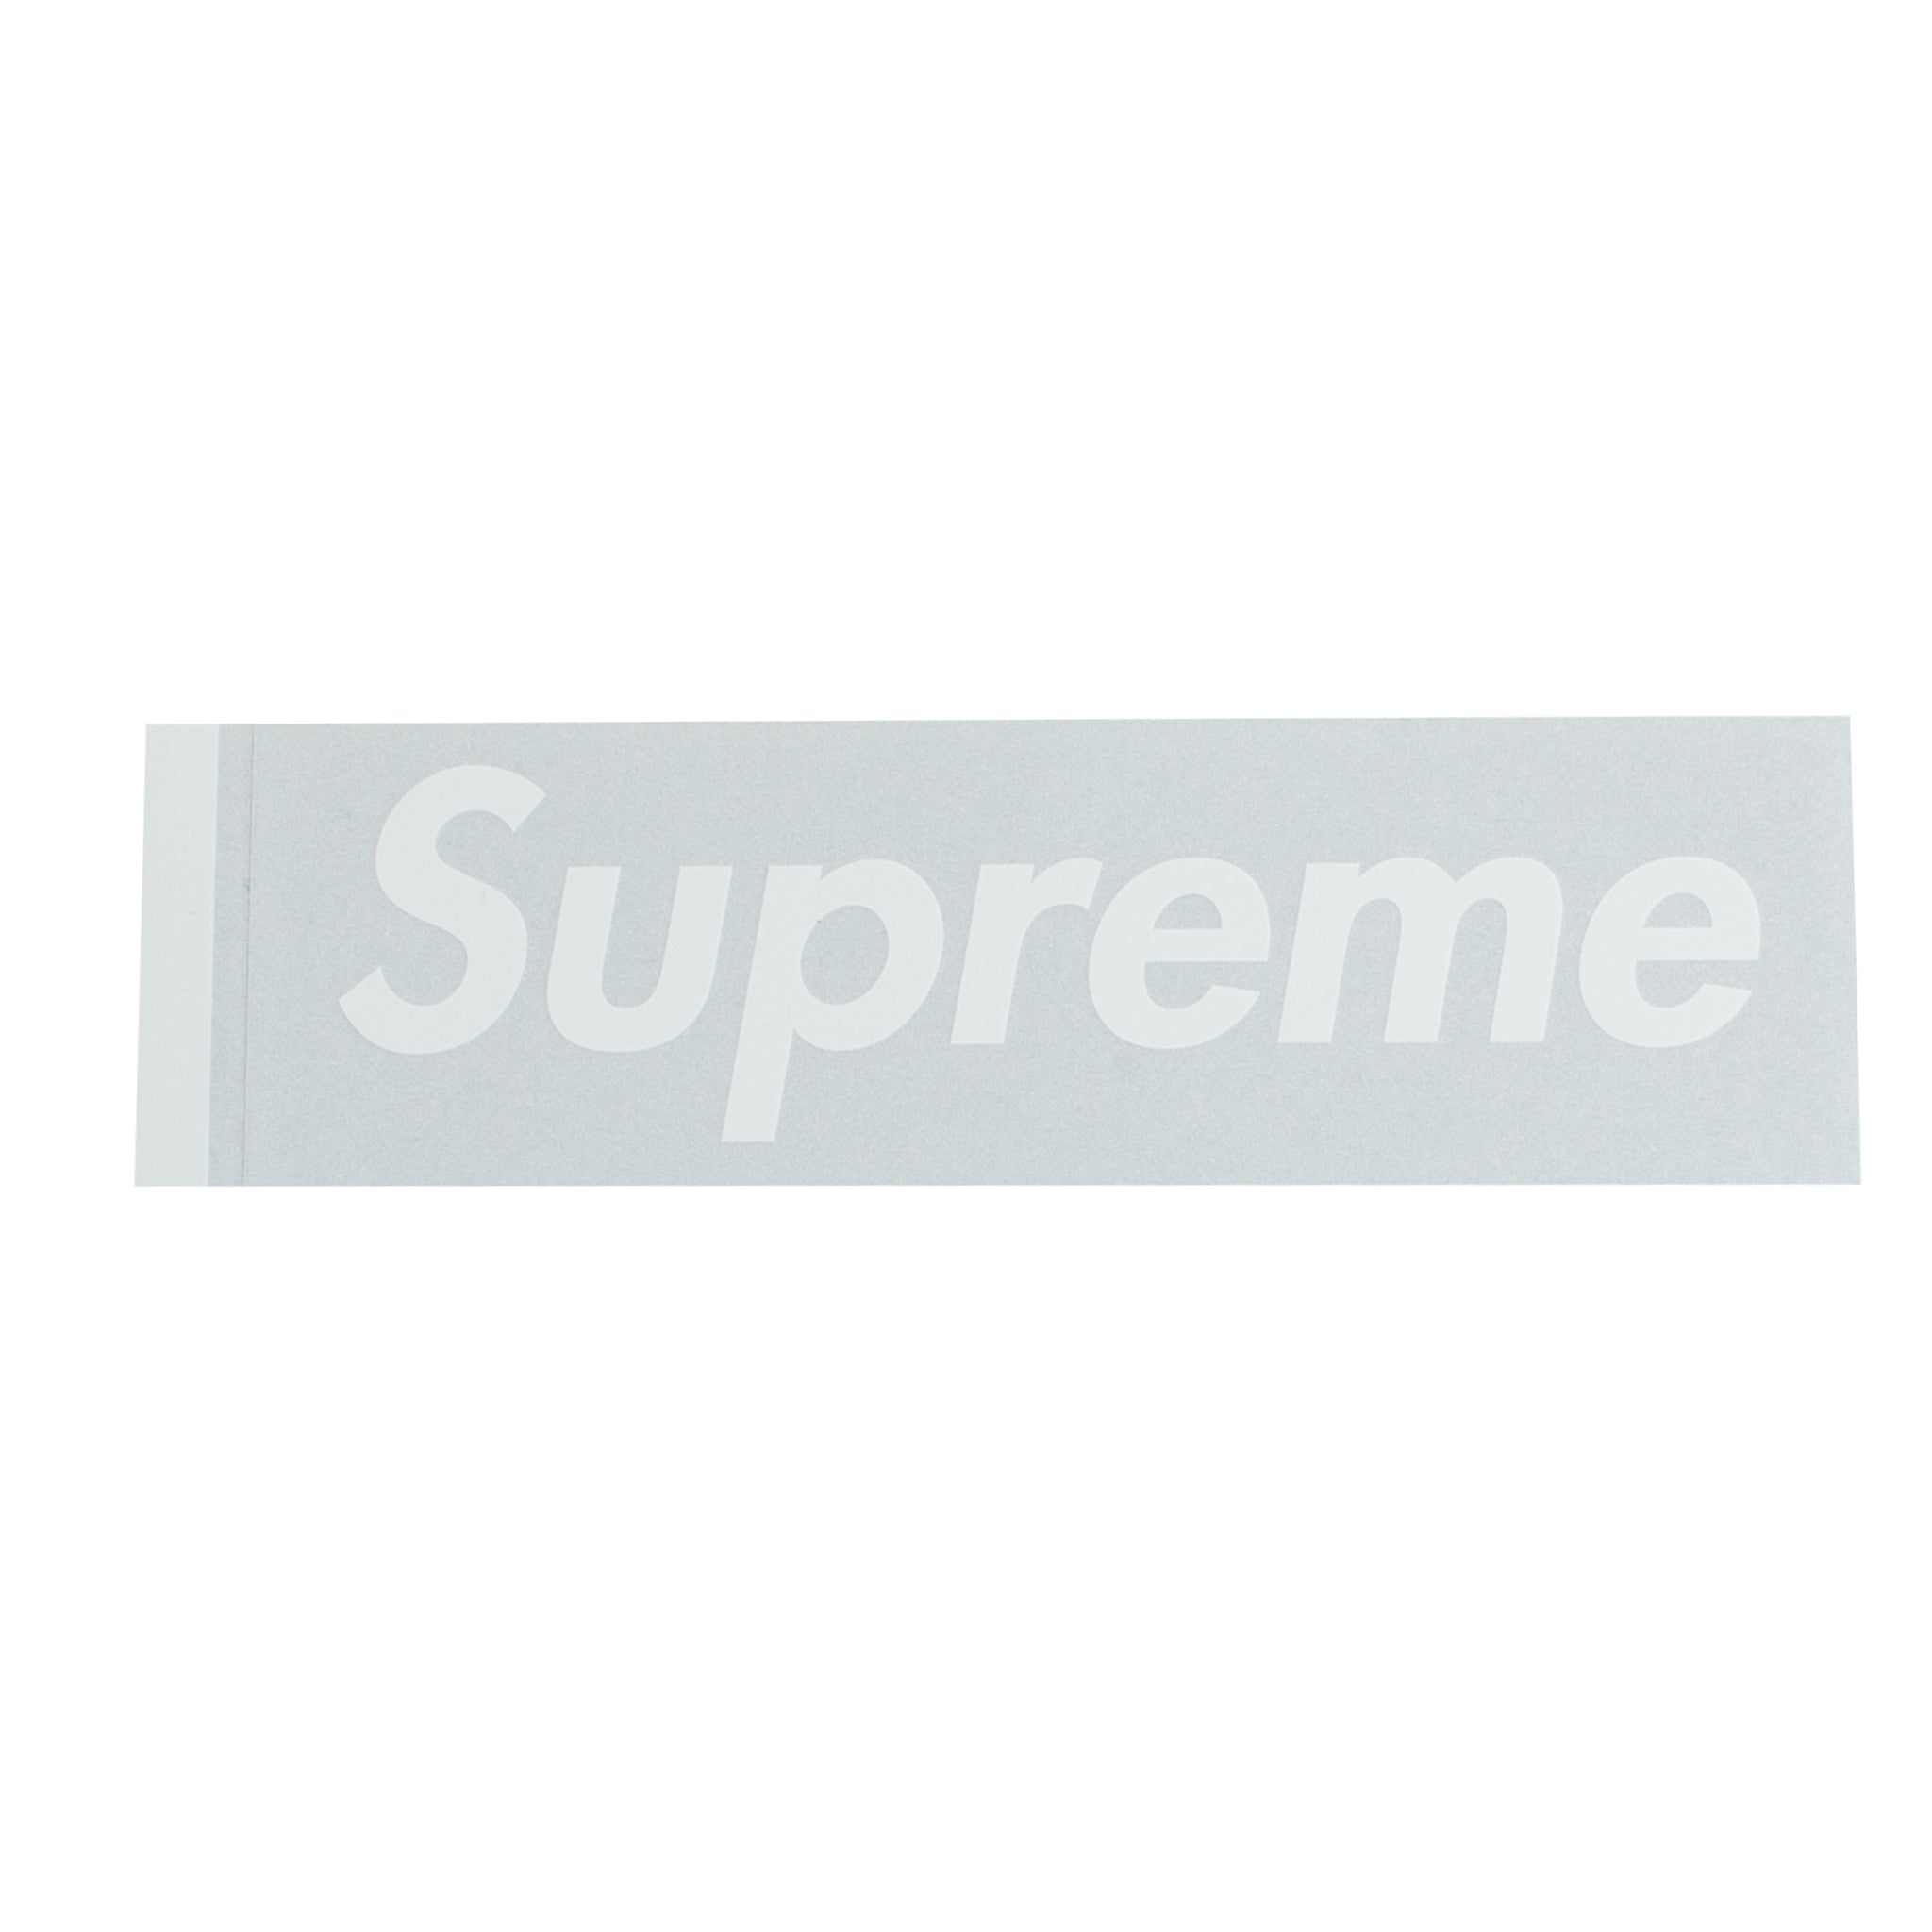 Supreme Black Box Logo Sticker  Logo sticker, Supreme black box logo, Box  logo